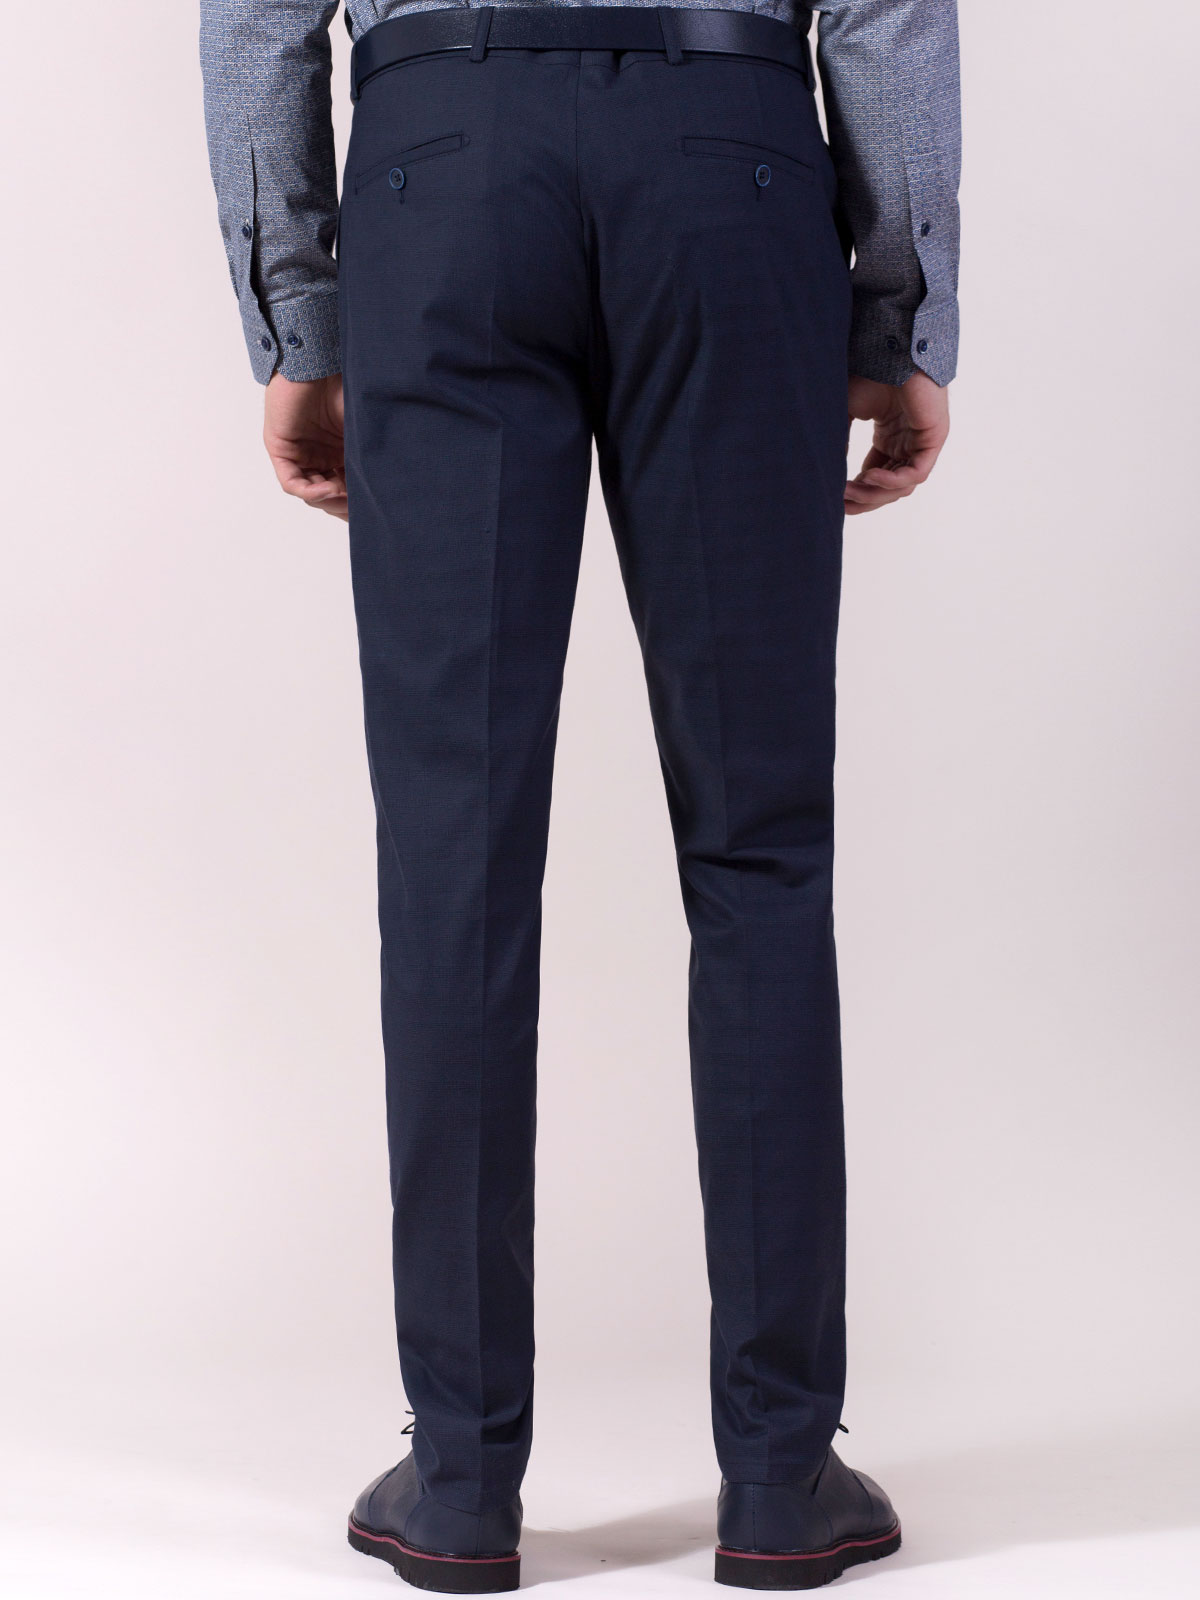 Plaid navy blue pants - 60273 € 21.93 img3